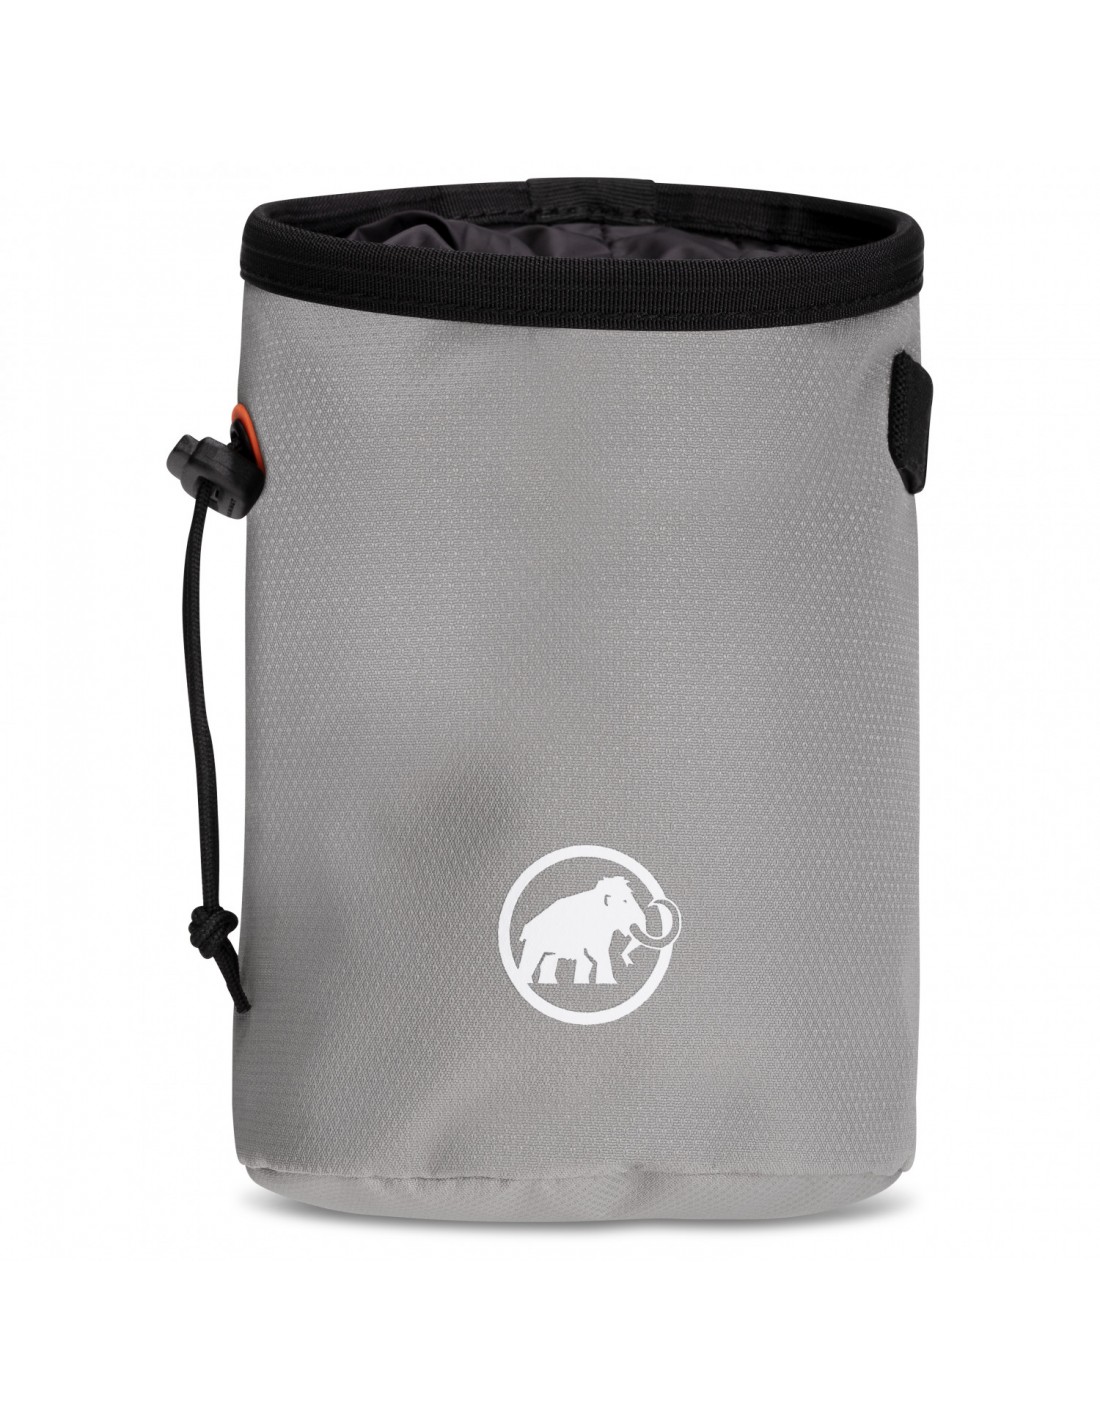 Mammut Gym Basic Chalk Bag, granit Chalkbag Verwendung - Klettern, Chalkbag Farbe - Grey, von Mammut